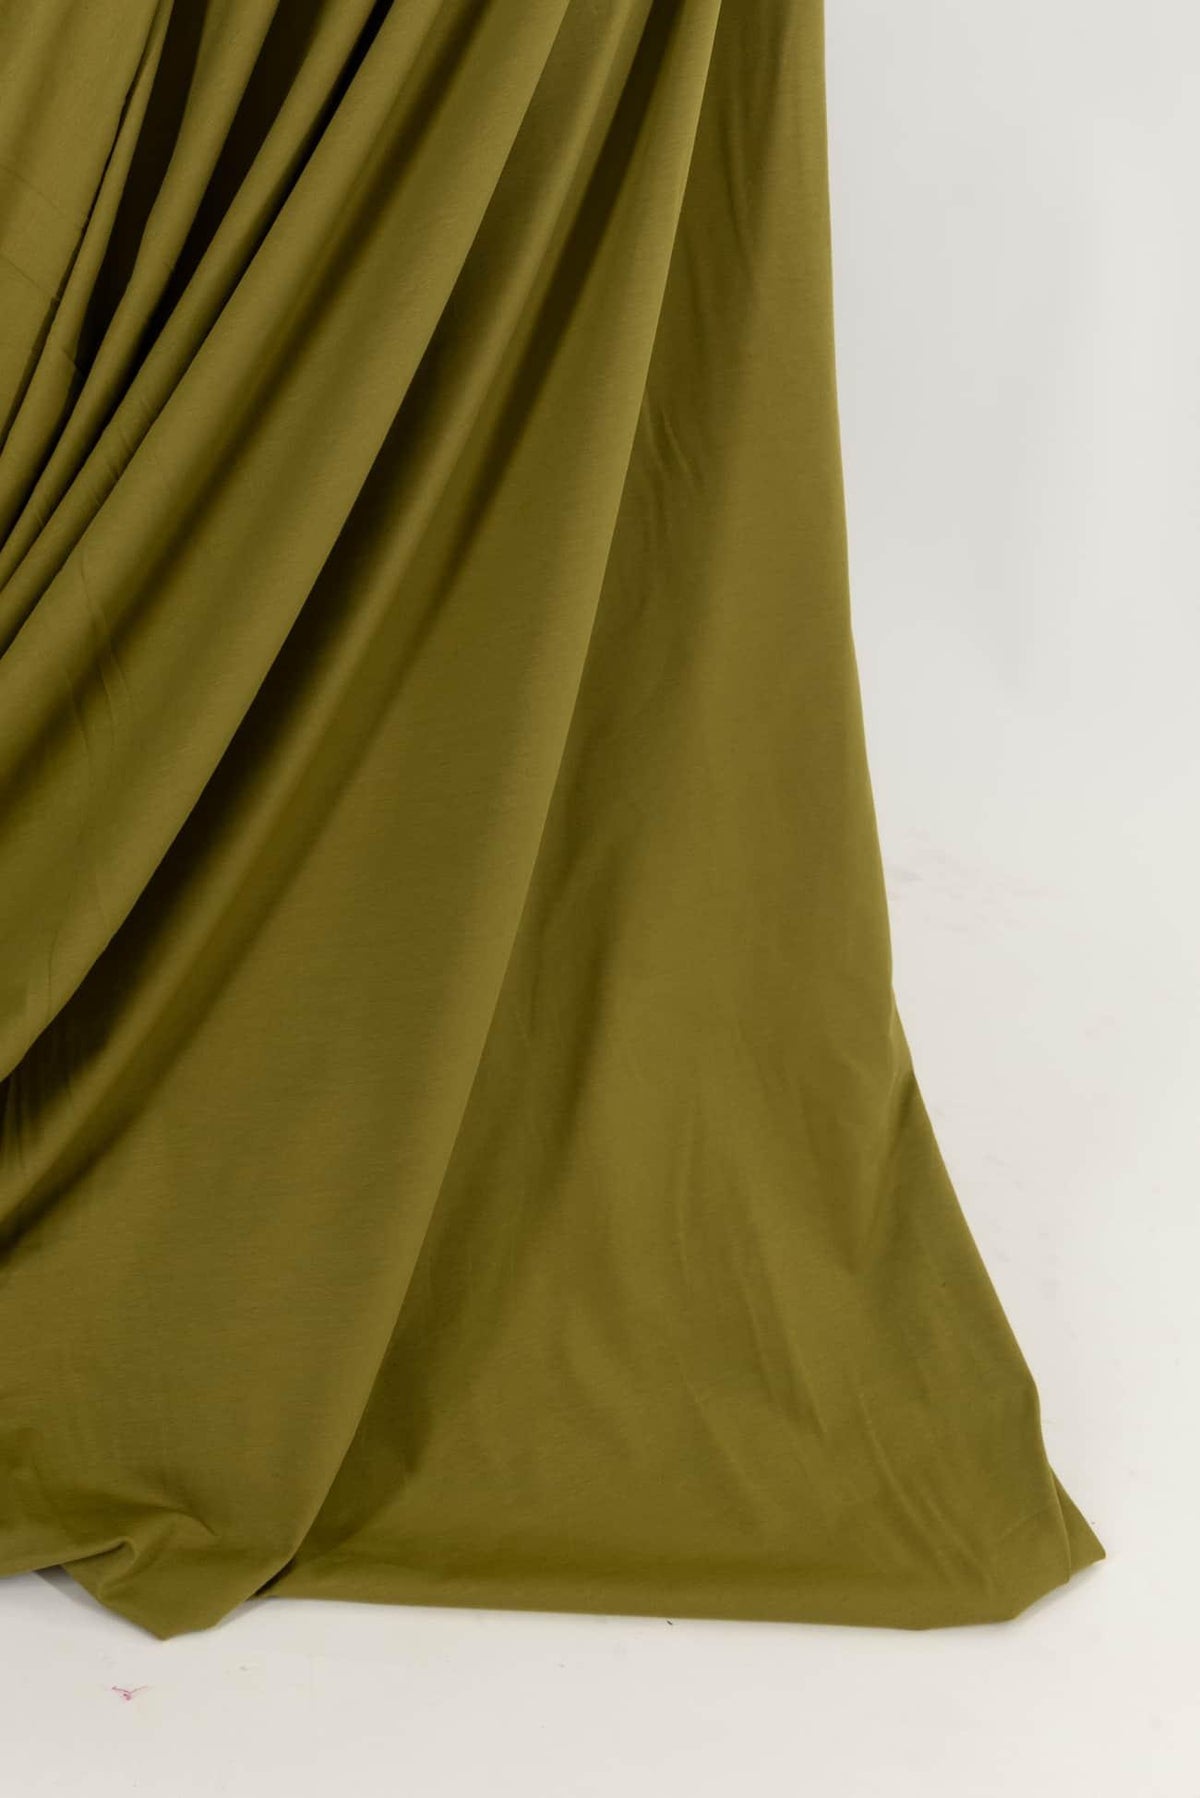 Absinthe Green Cotton/Spandex Knit - Marcy Tilton Fabrics